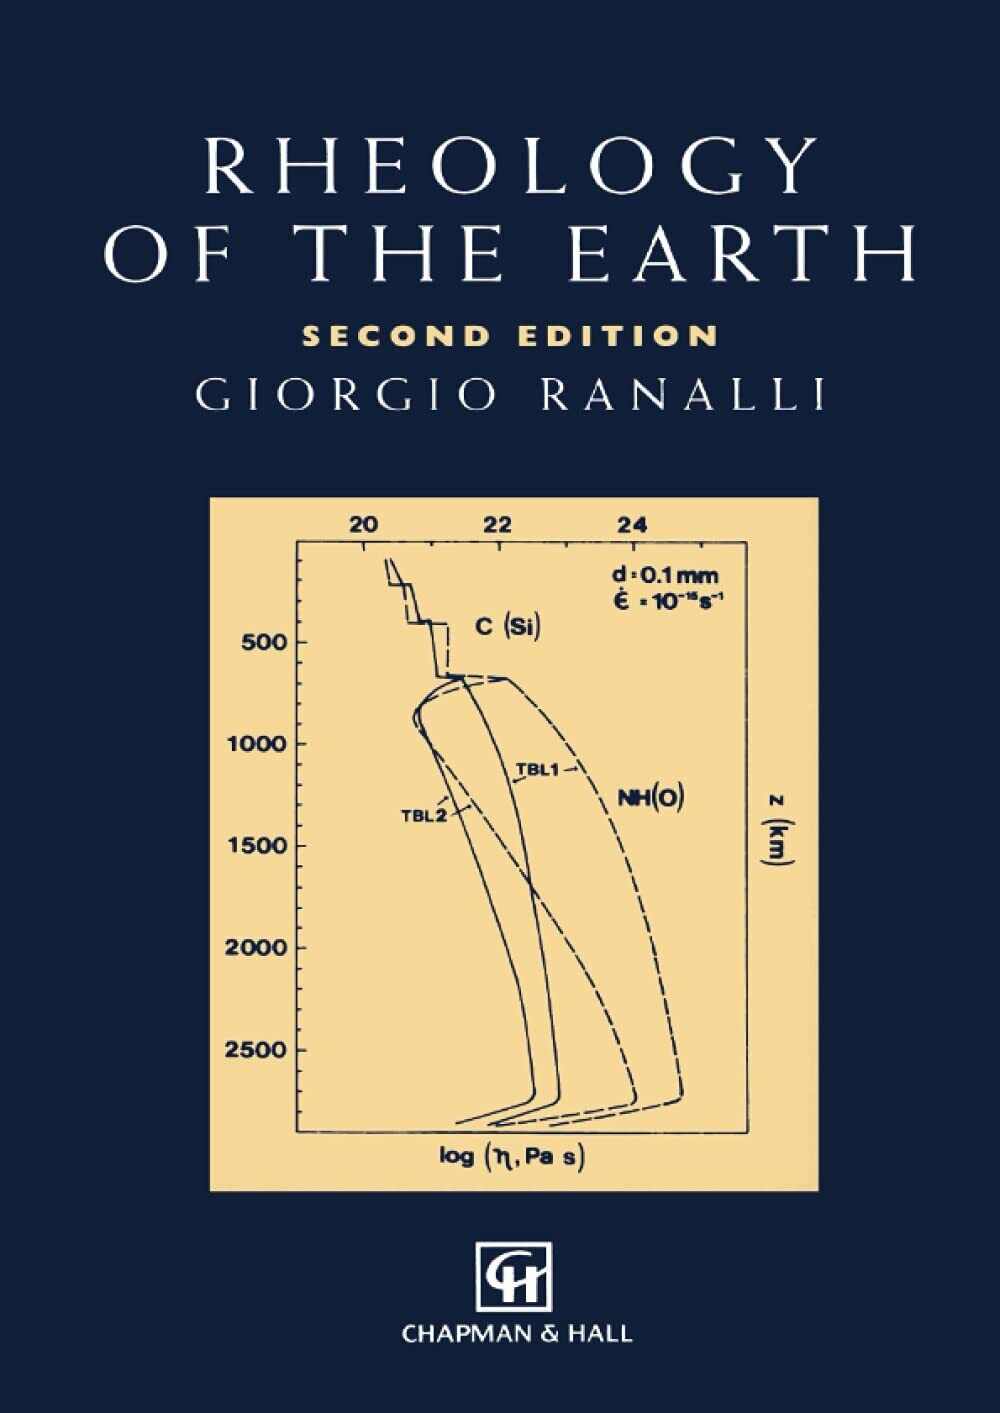 Rheology of the Earth - Giorgio Ranalli - Springer, 1995